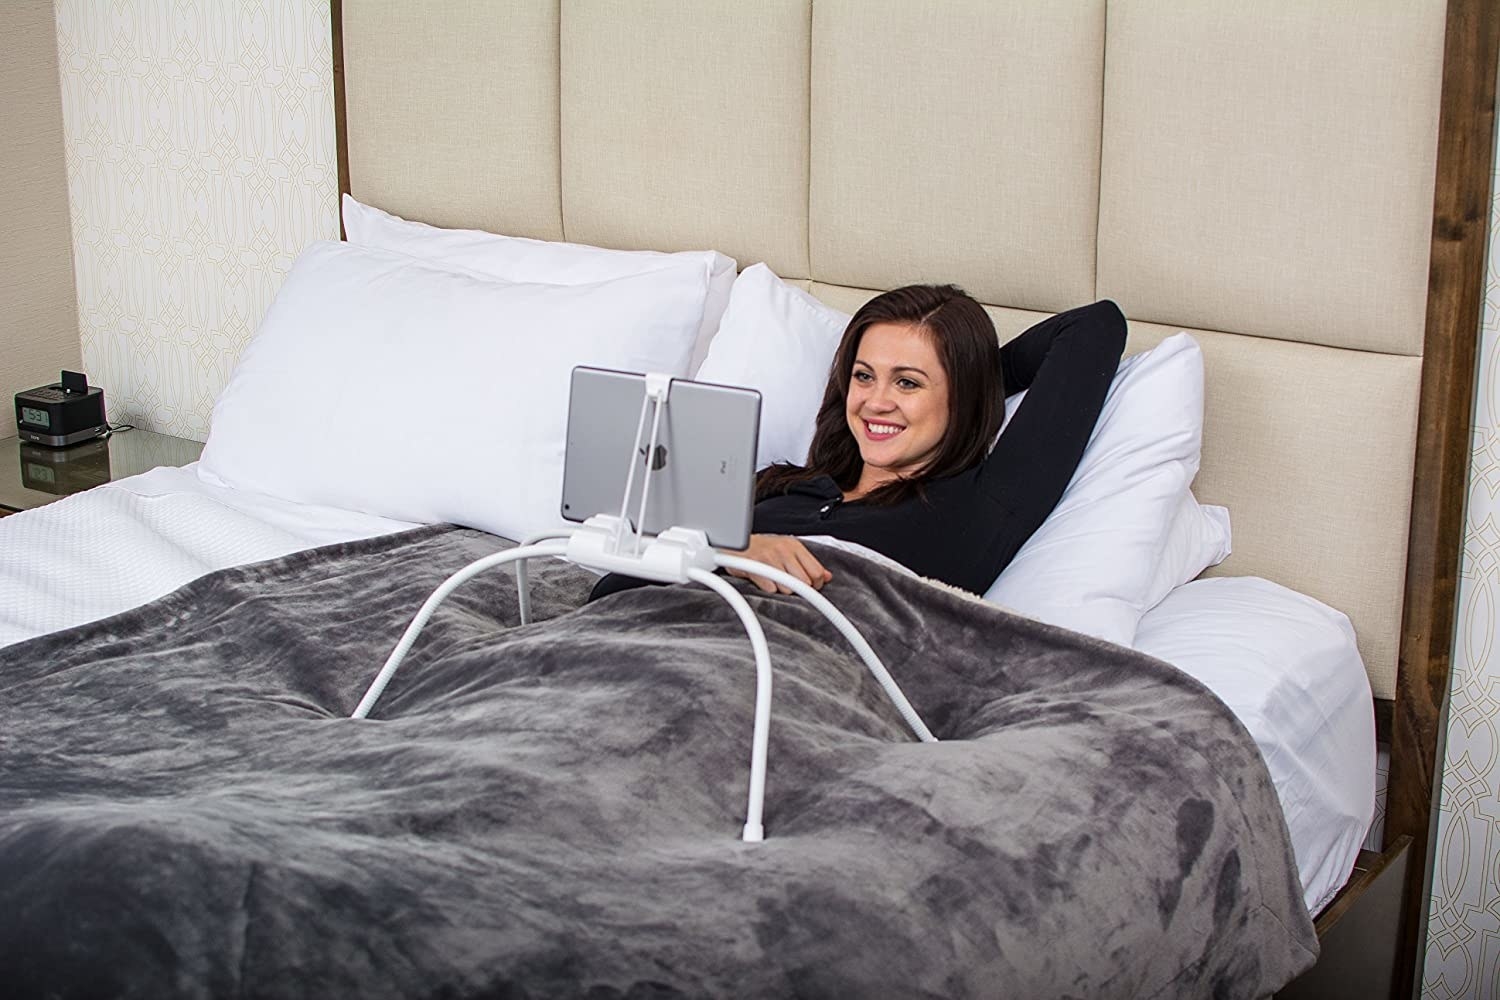 Model using the white tablet holder in bed